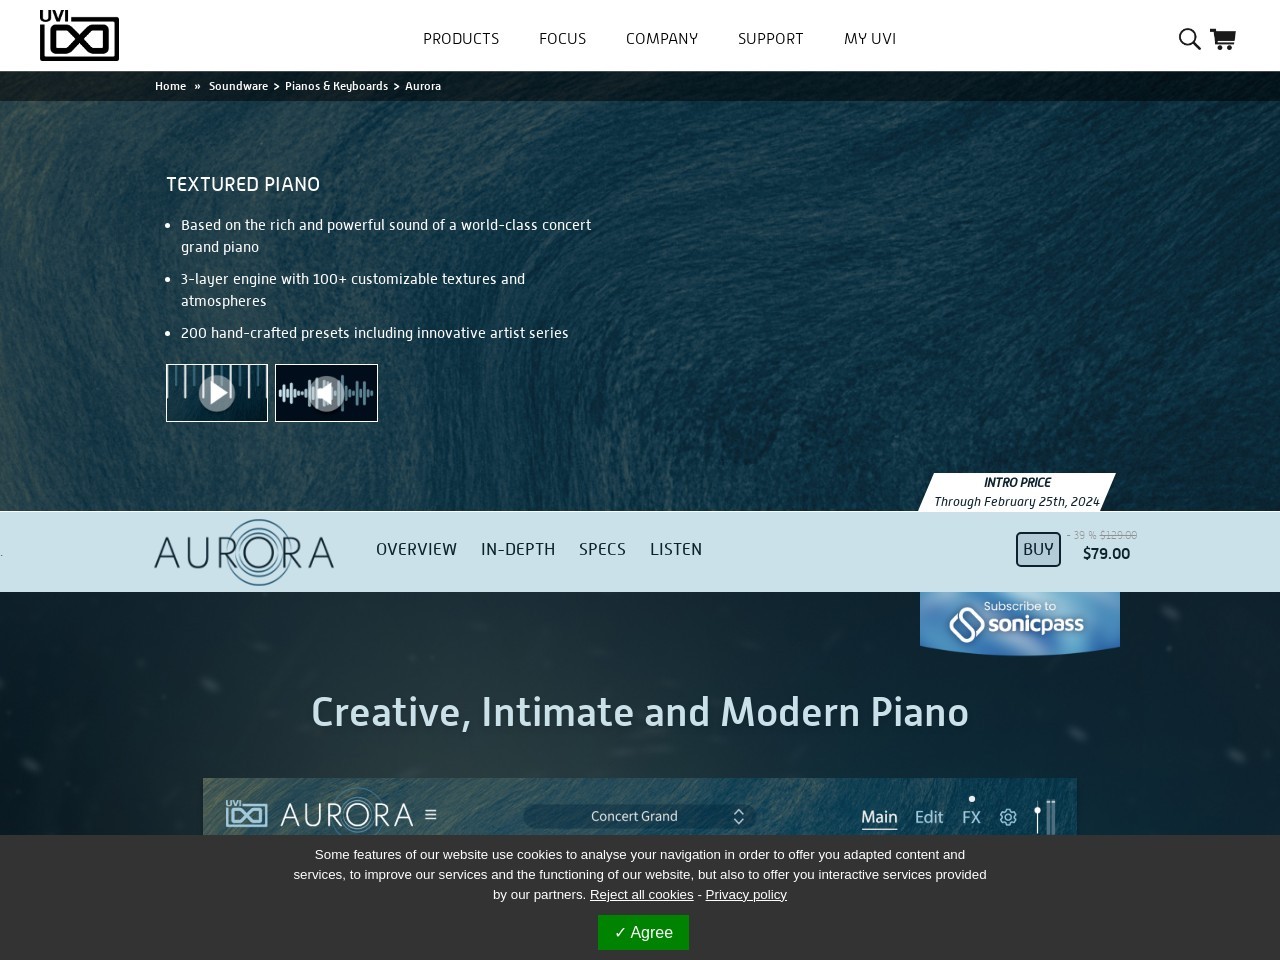 Aurora - Textured Piano